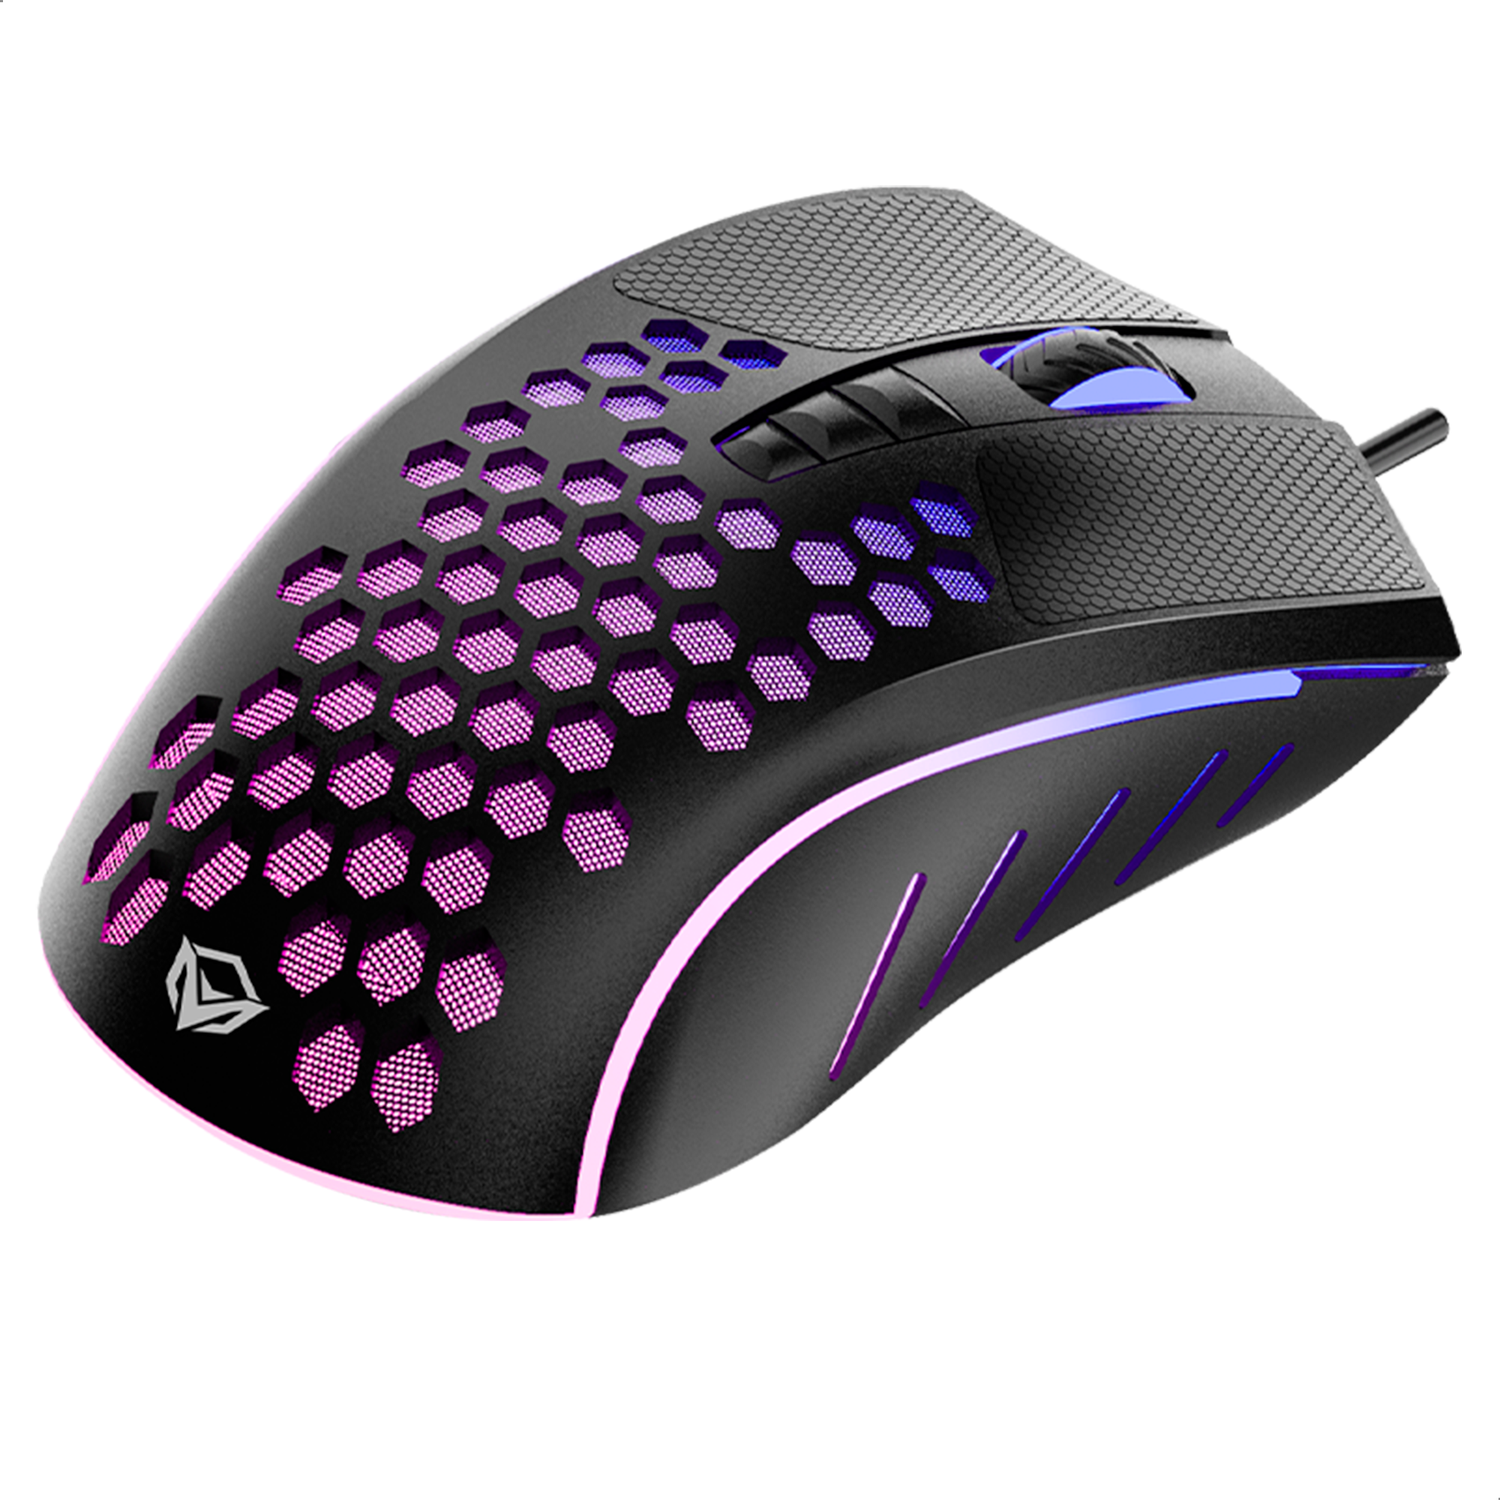 Mouse Gamer BINDEN GM015 hasta 6400 DPI Ajustable y Luz RGB